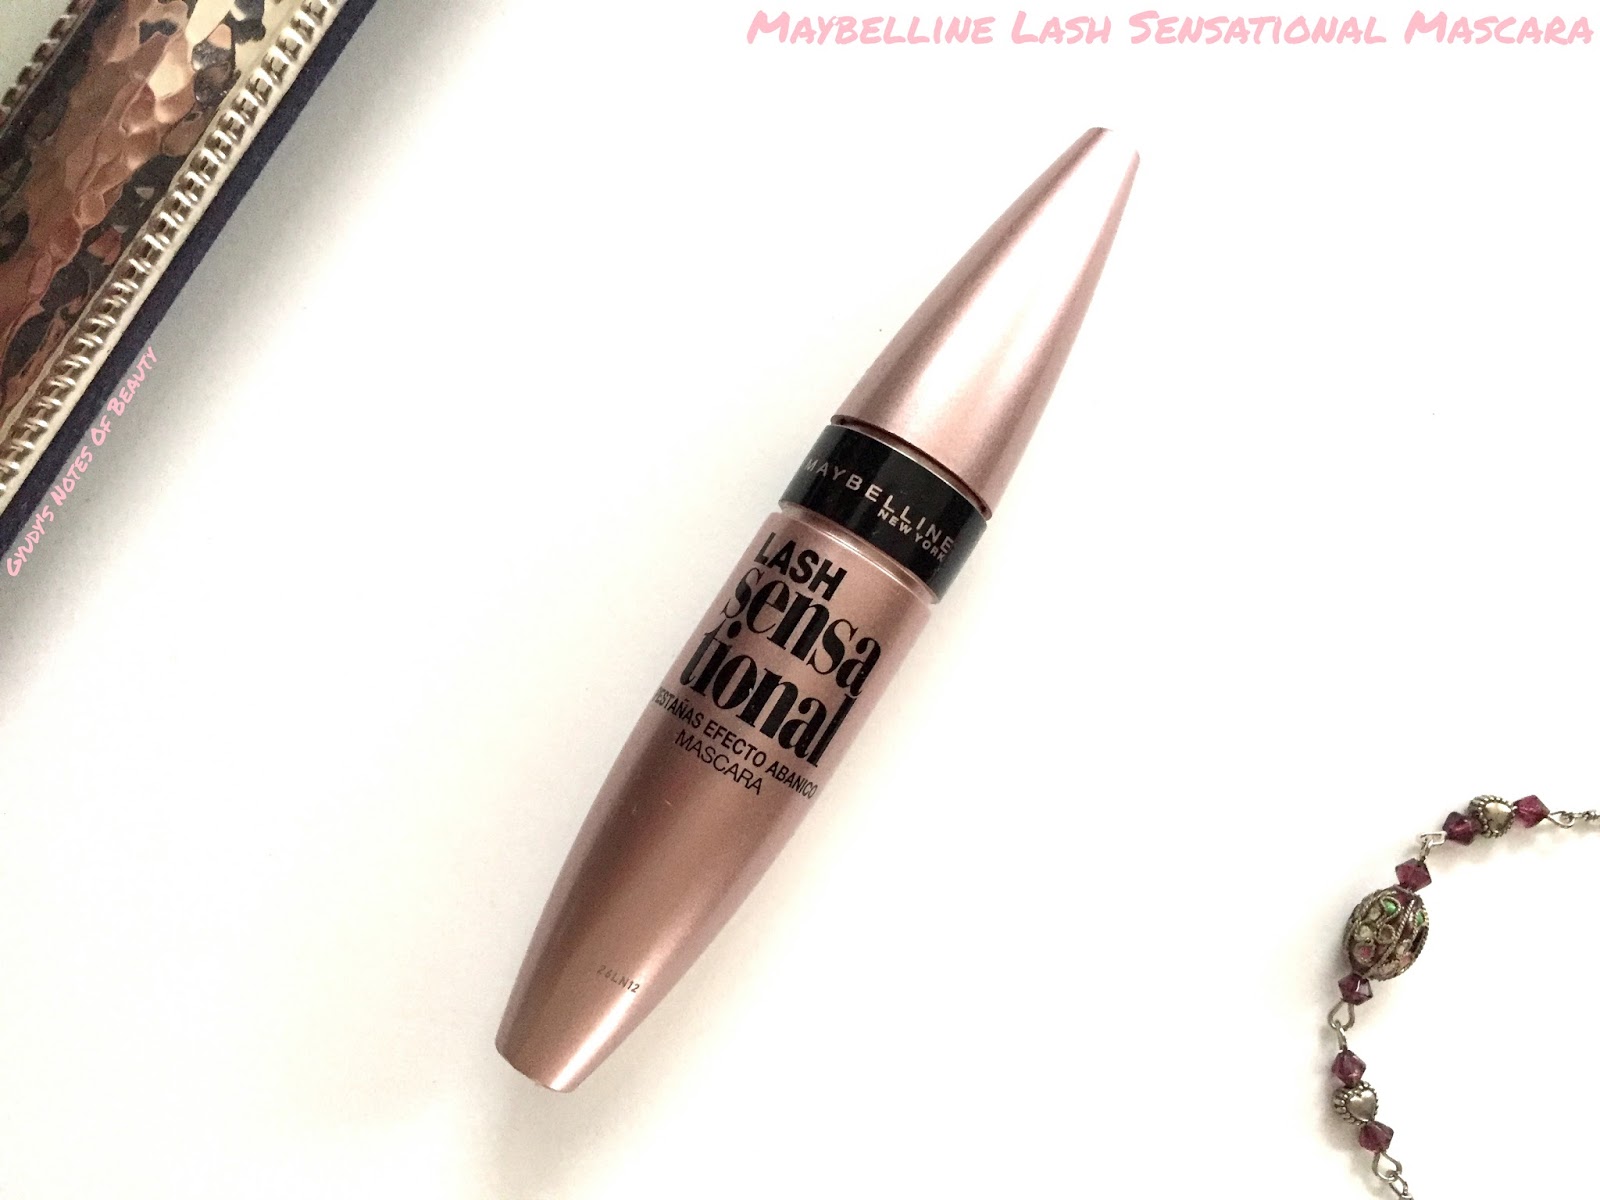 Maybelline Lash Sensational Mascara Review